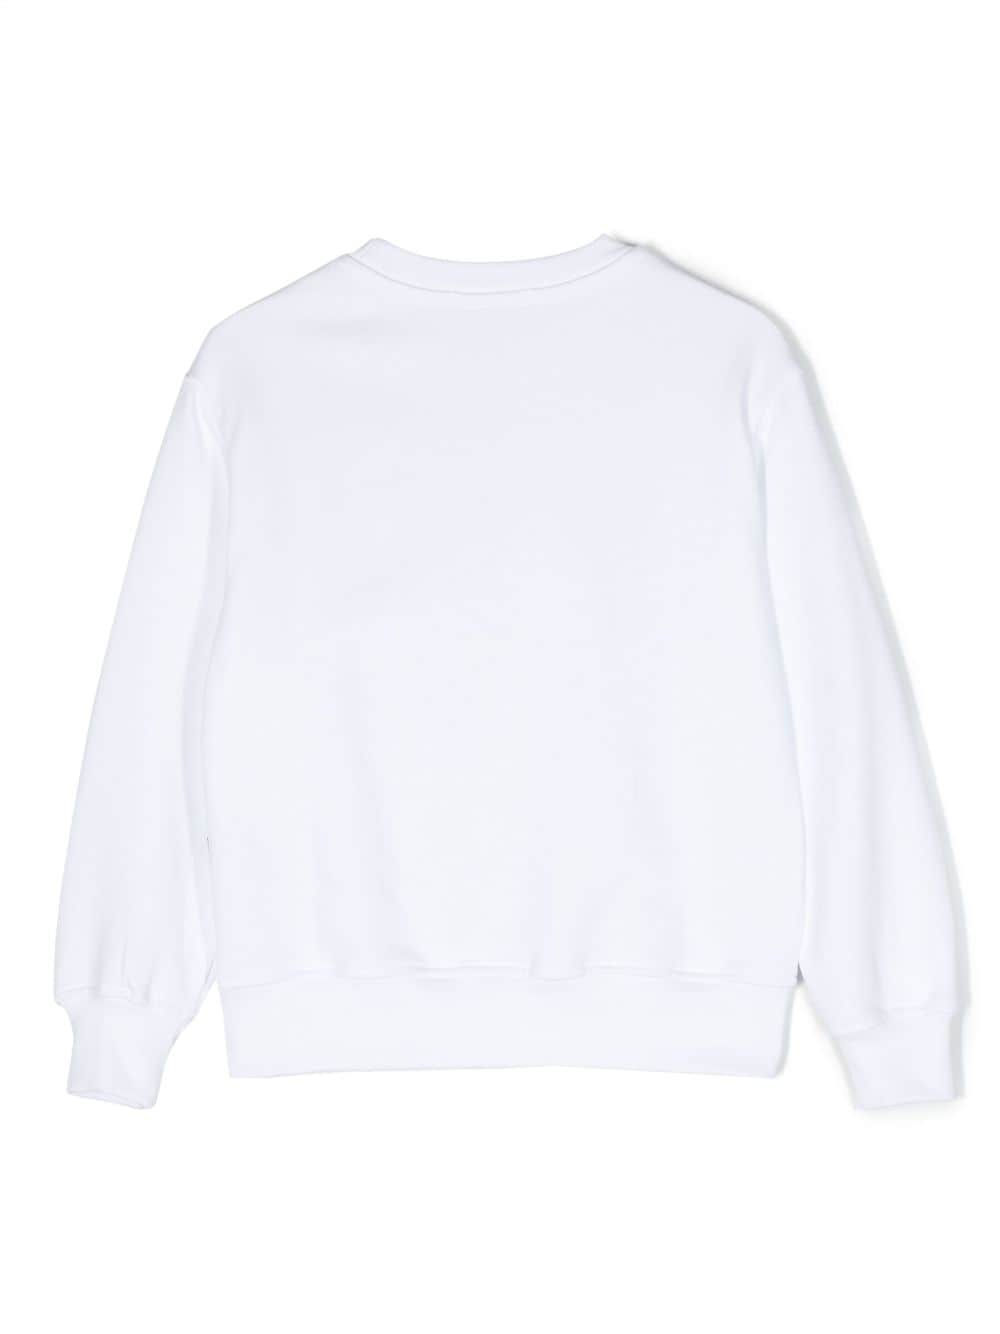 White sweatshirt for boys with logo print